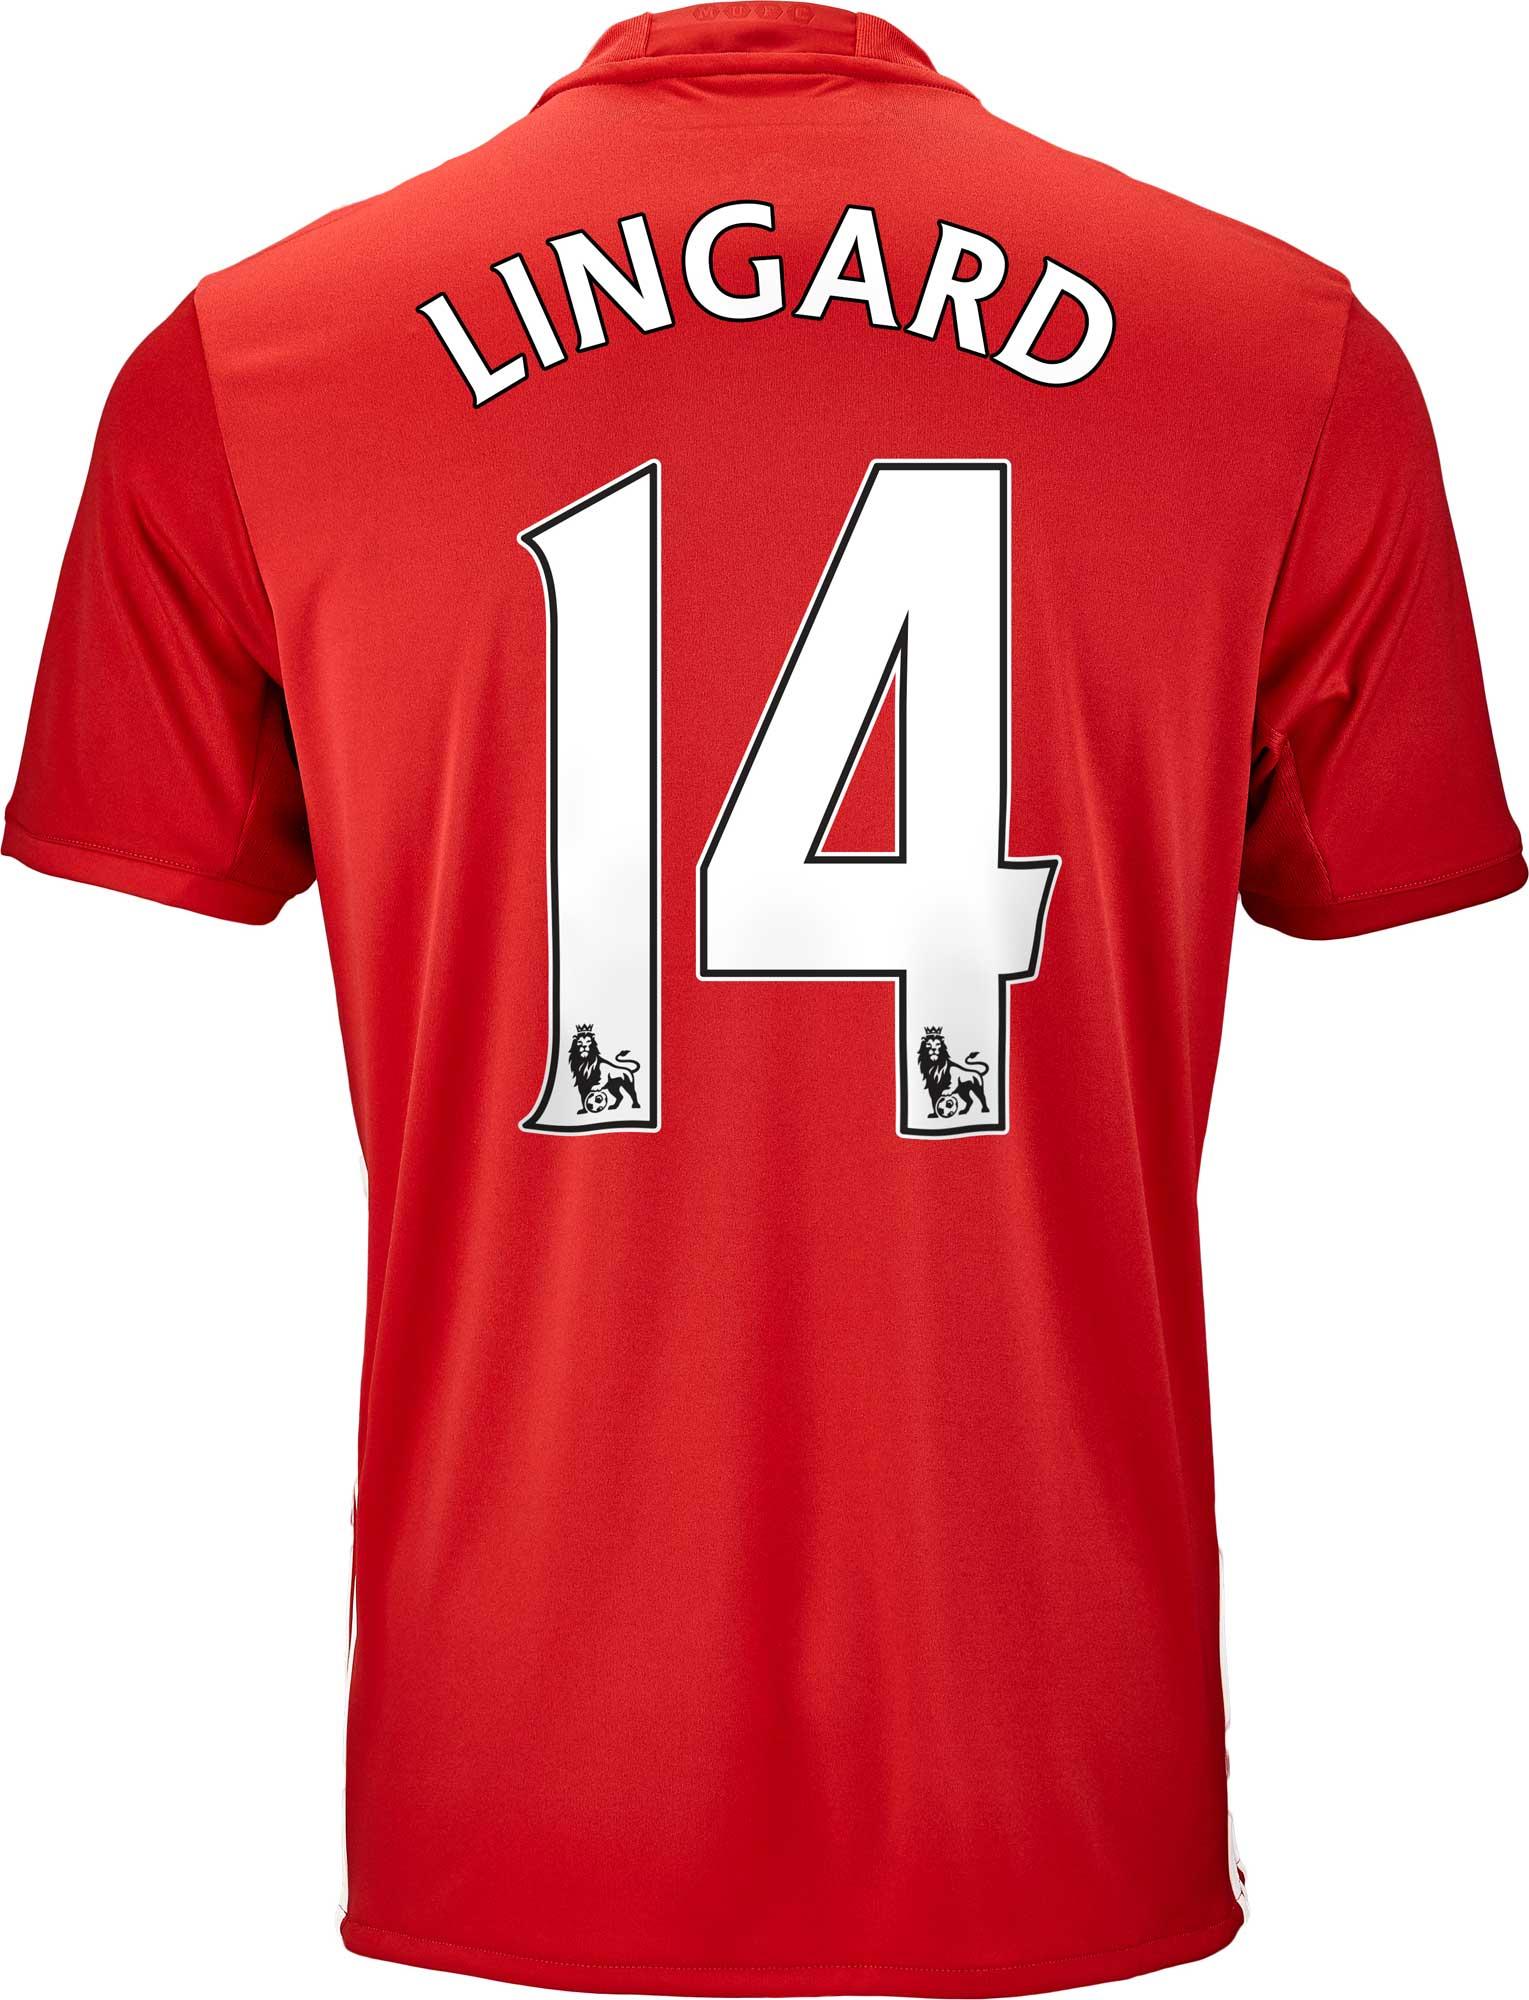 adidas Lingard Manchester United Jersey 